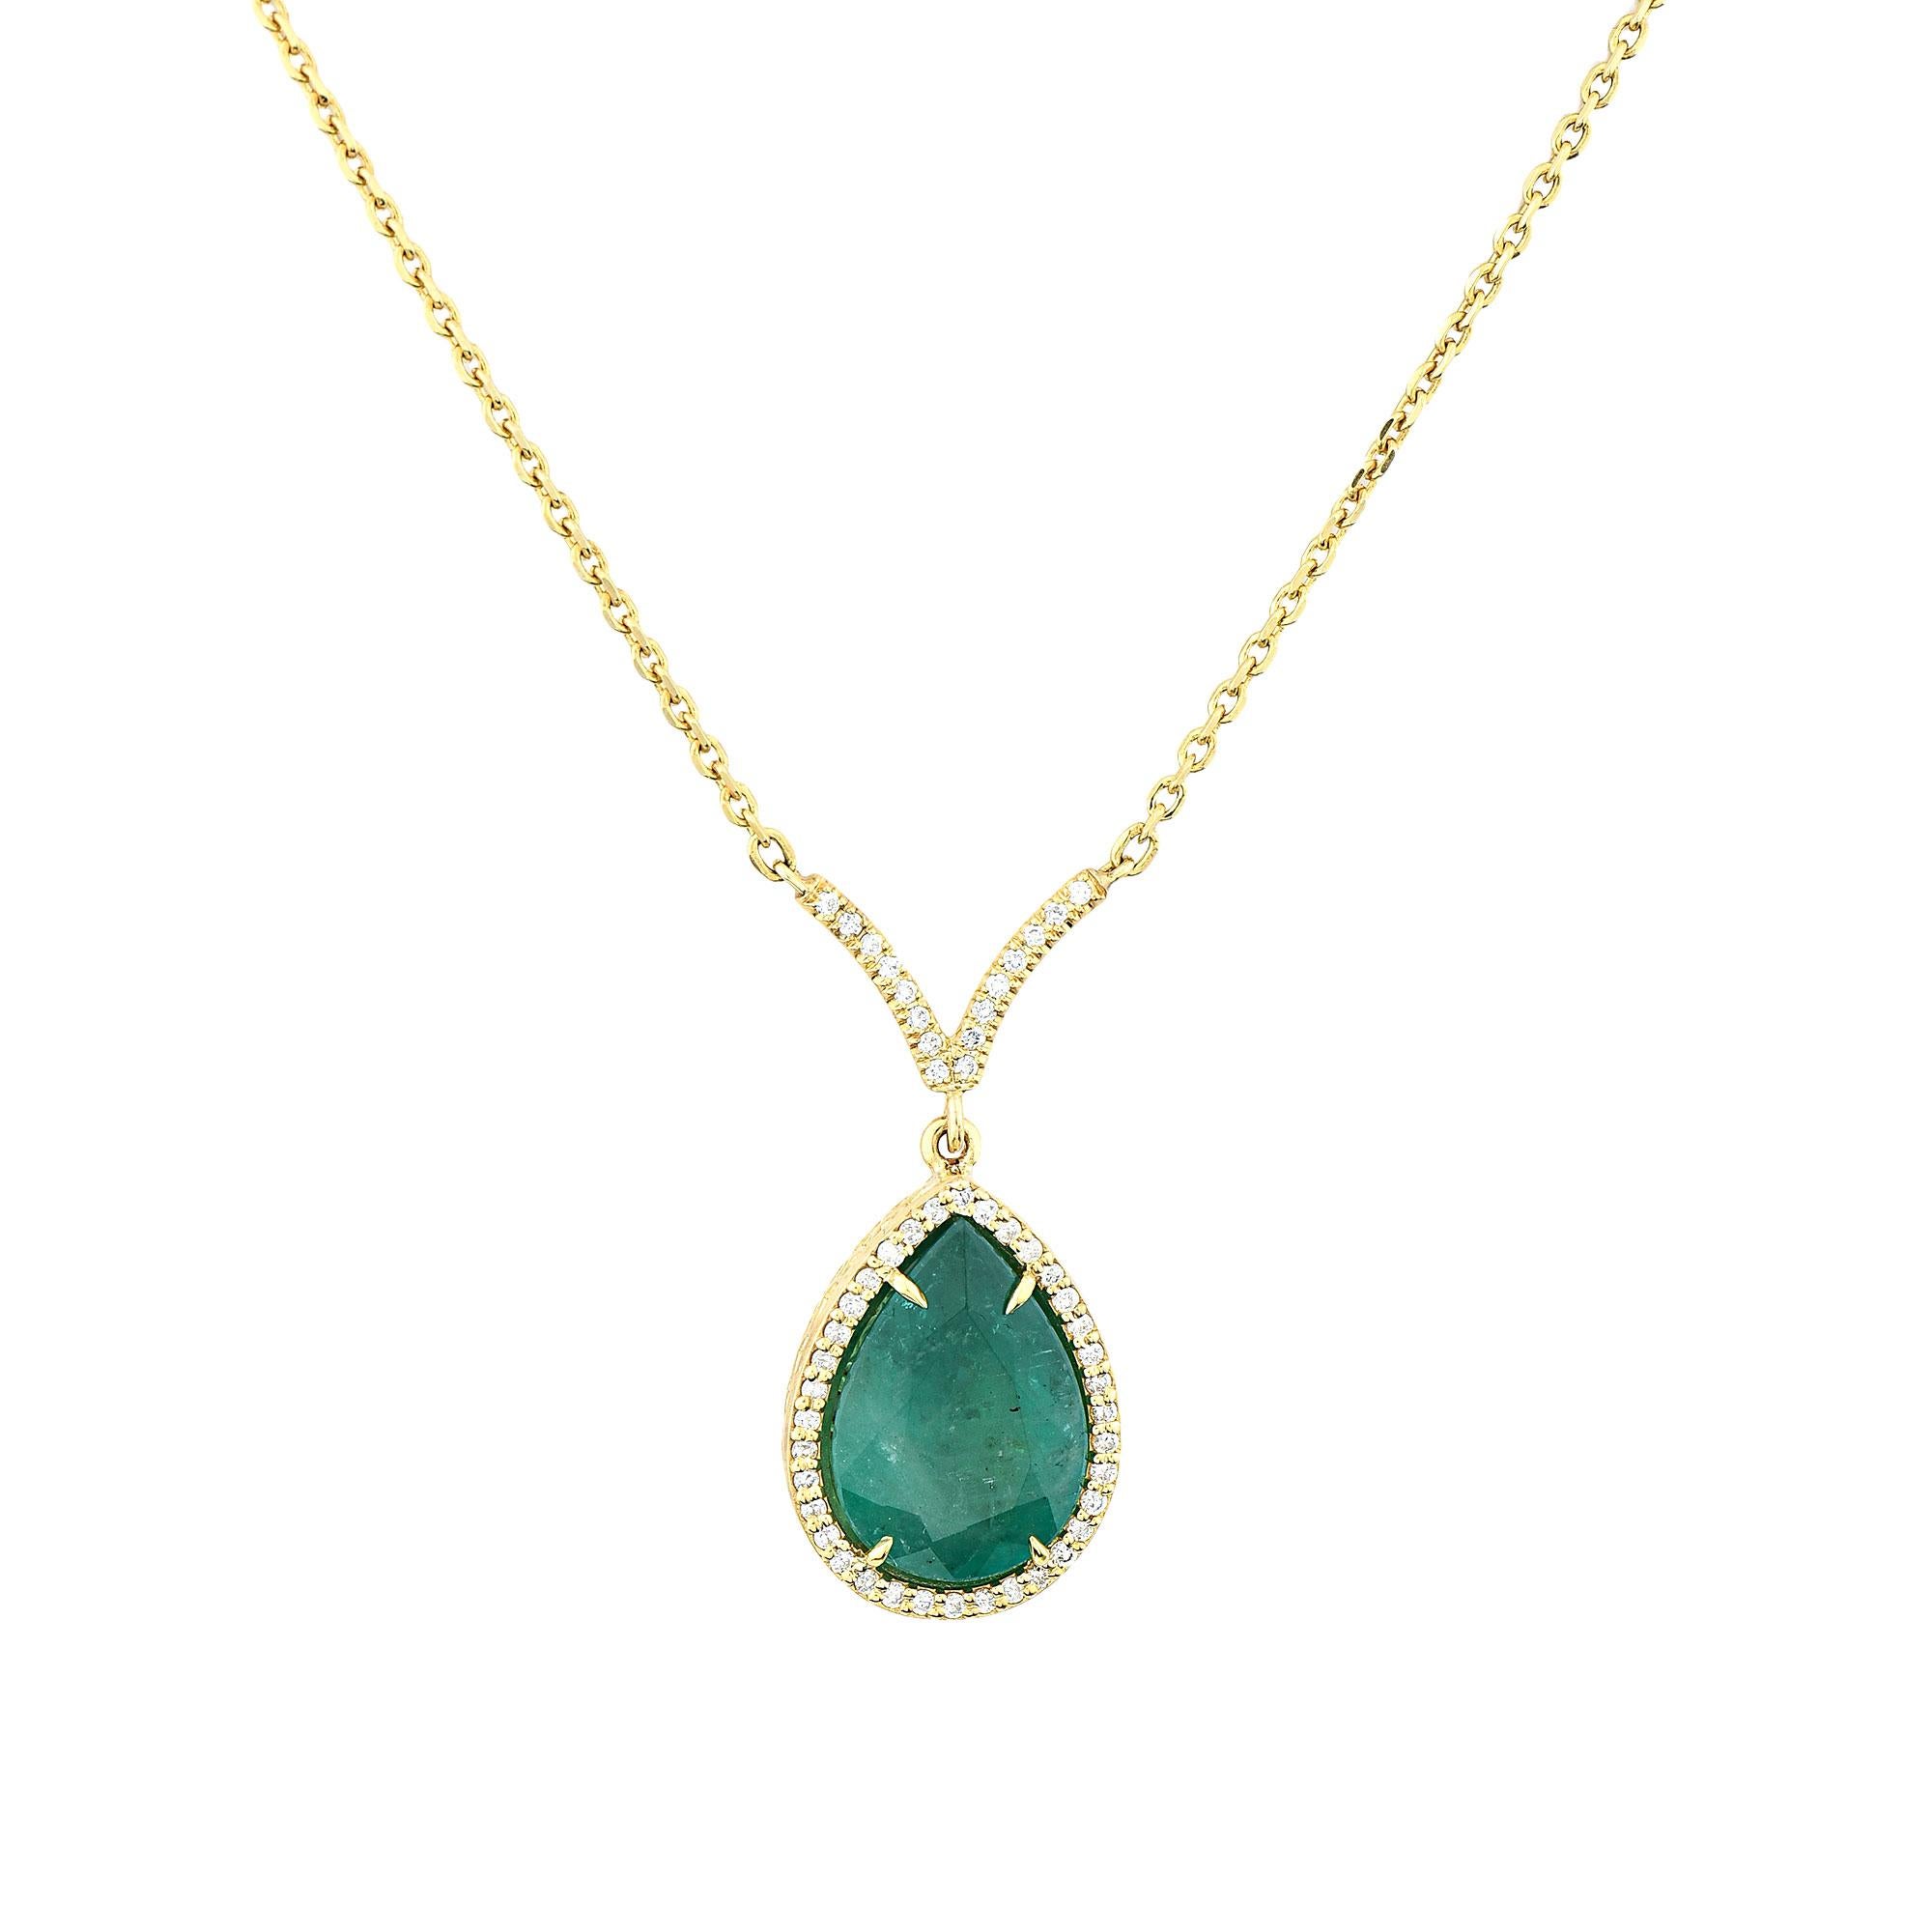 Emerald: 9.80cts

Diamonds: 2.20cts